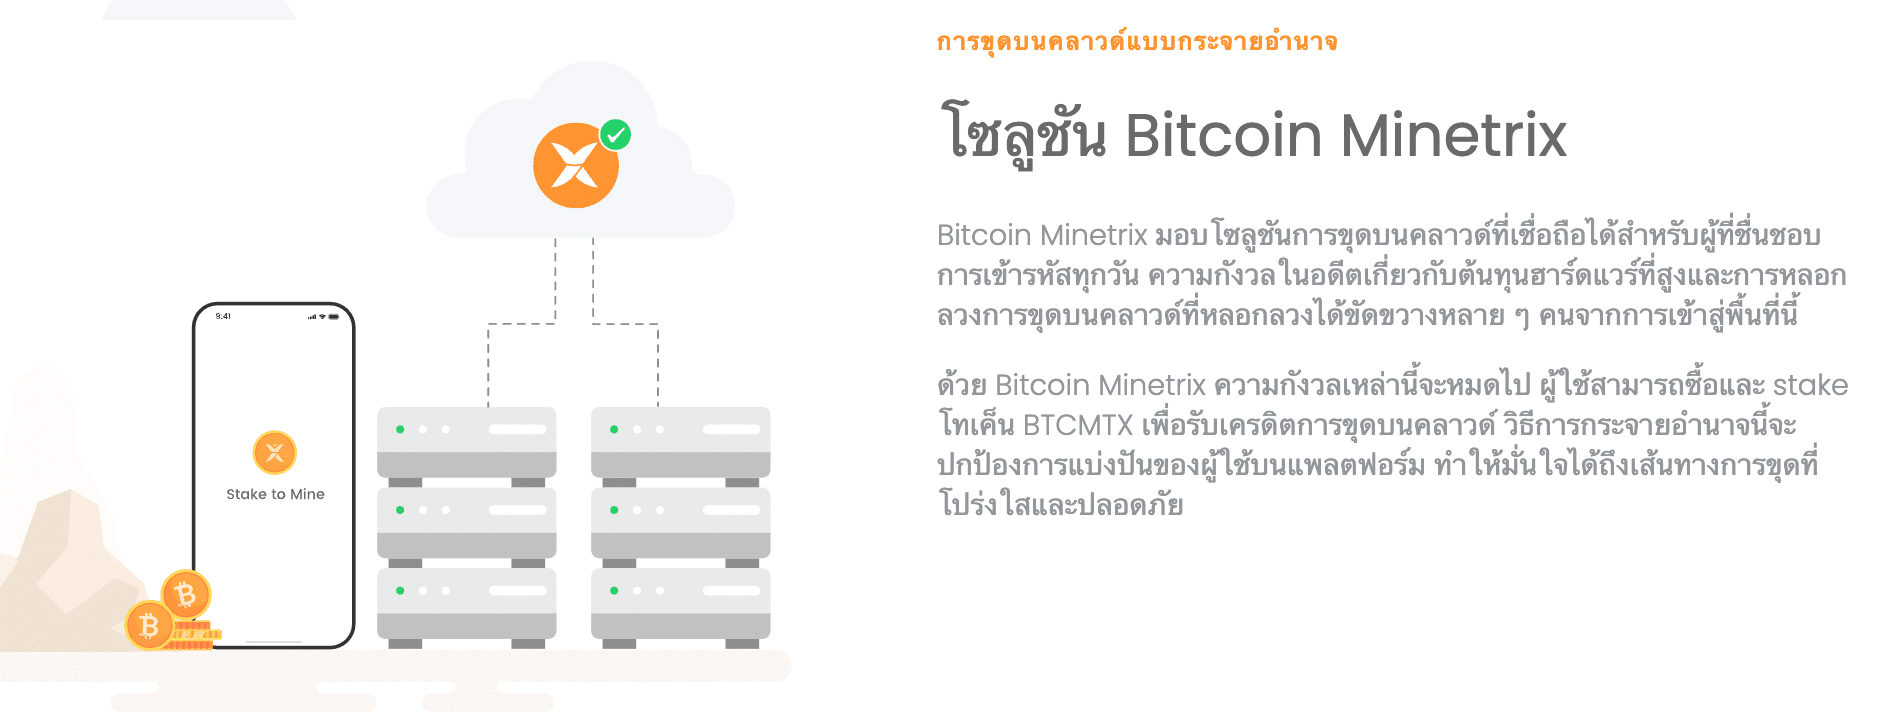 Bitcoin Minetrix เหรียญมาใหม่